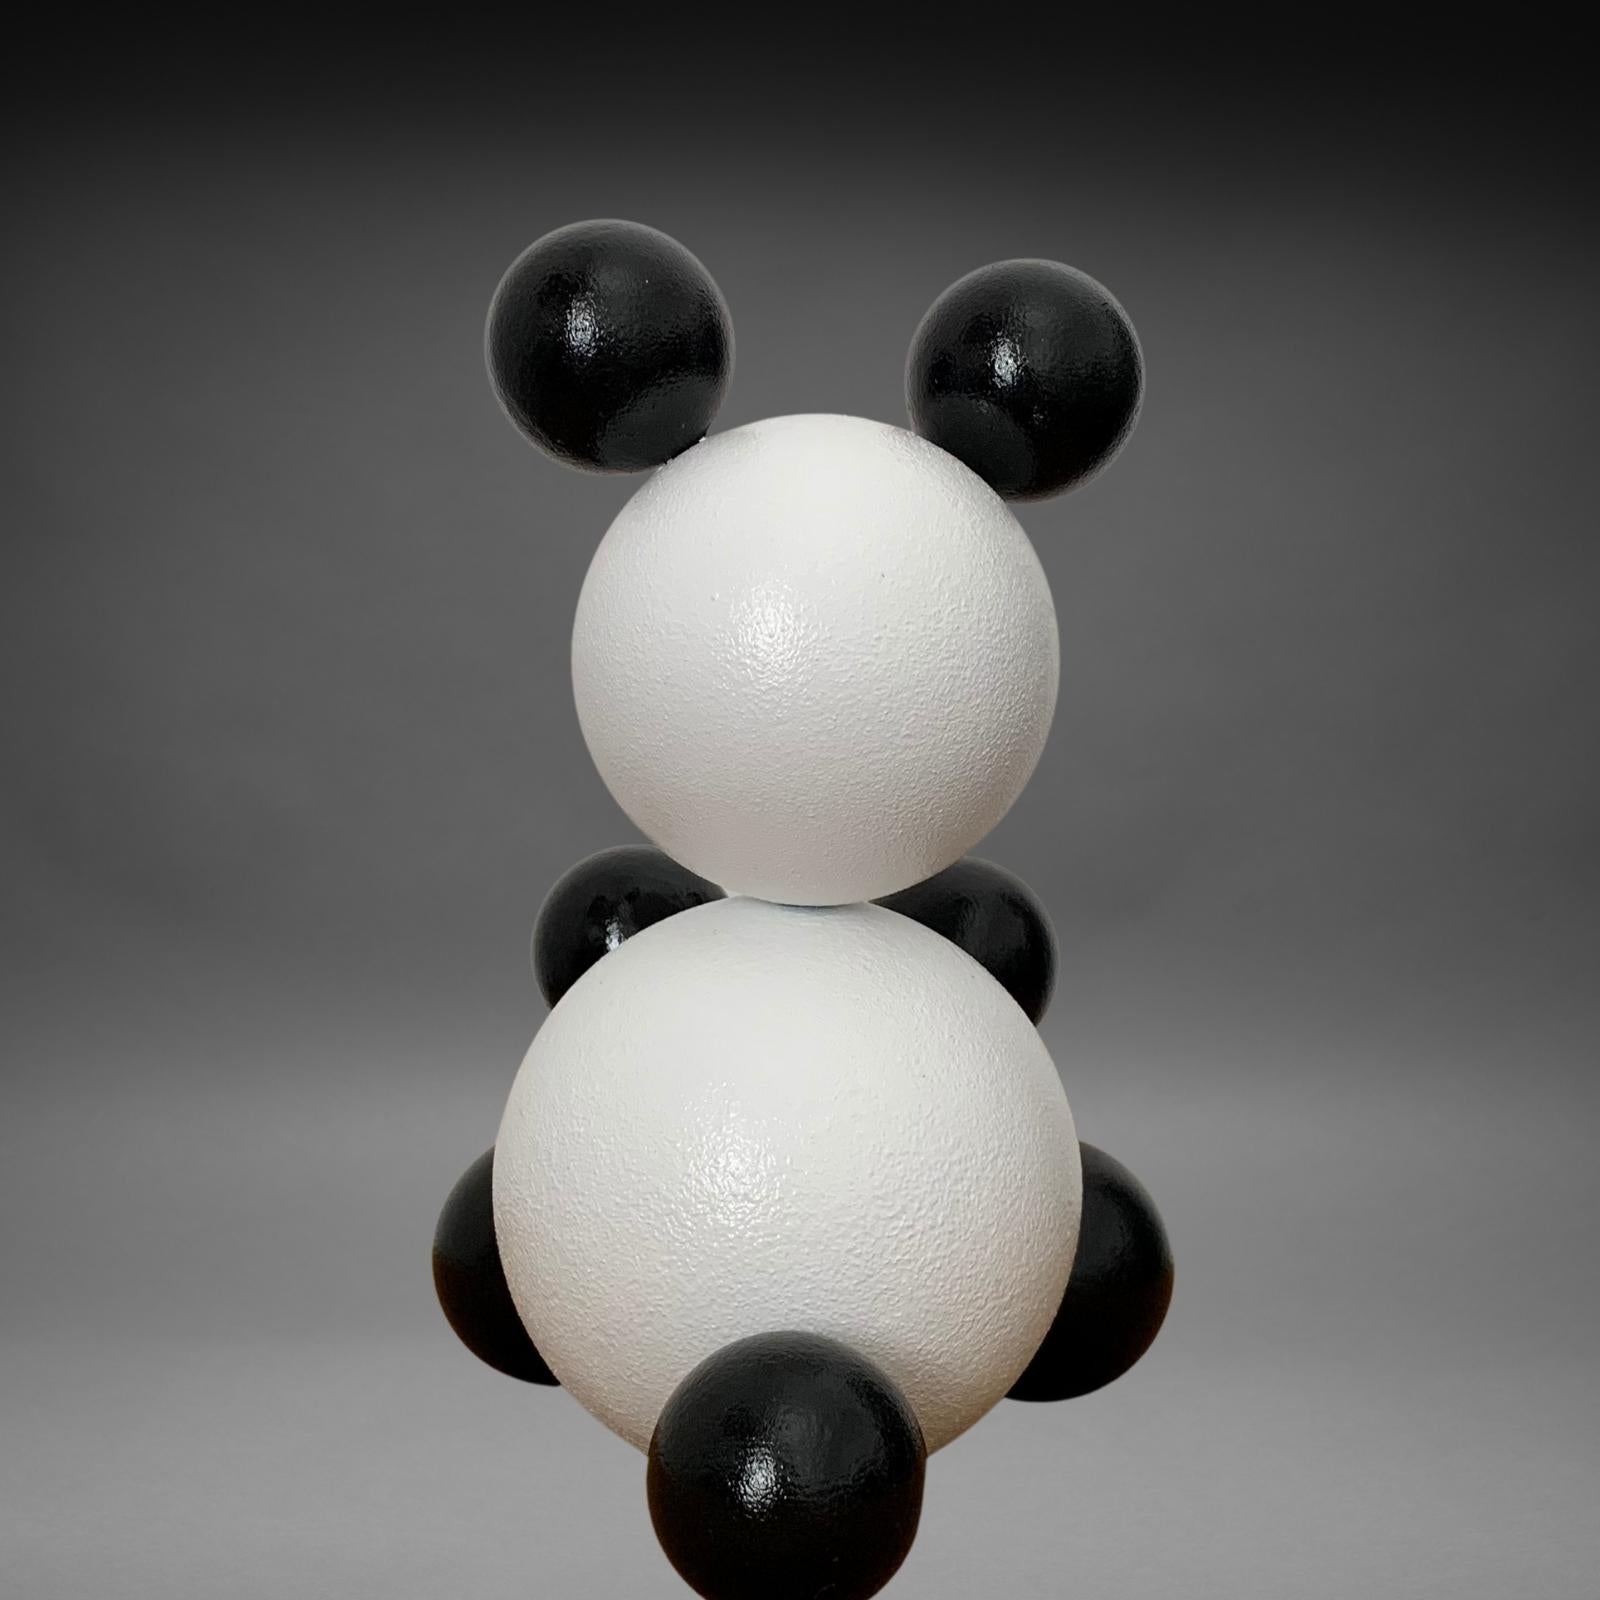 Panda Small Steel Bear 2 Animal Abstract Sculpture - Black Figurative Sculpture by Rostyslav Kozhman